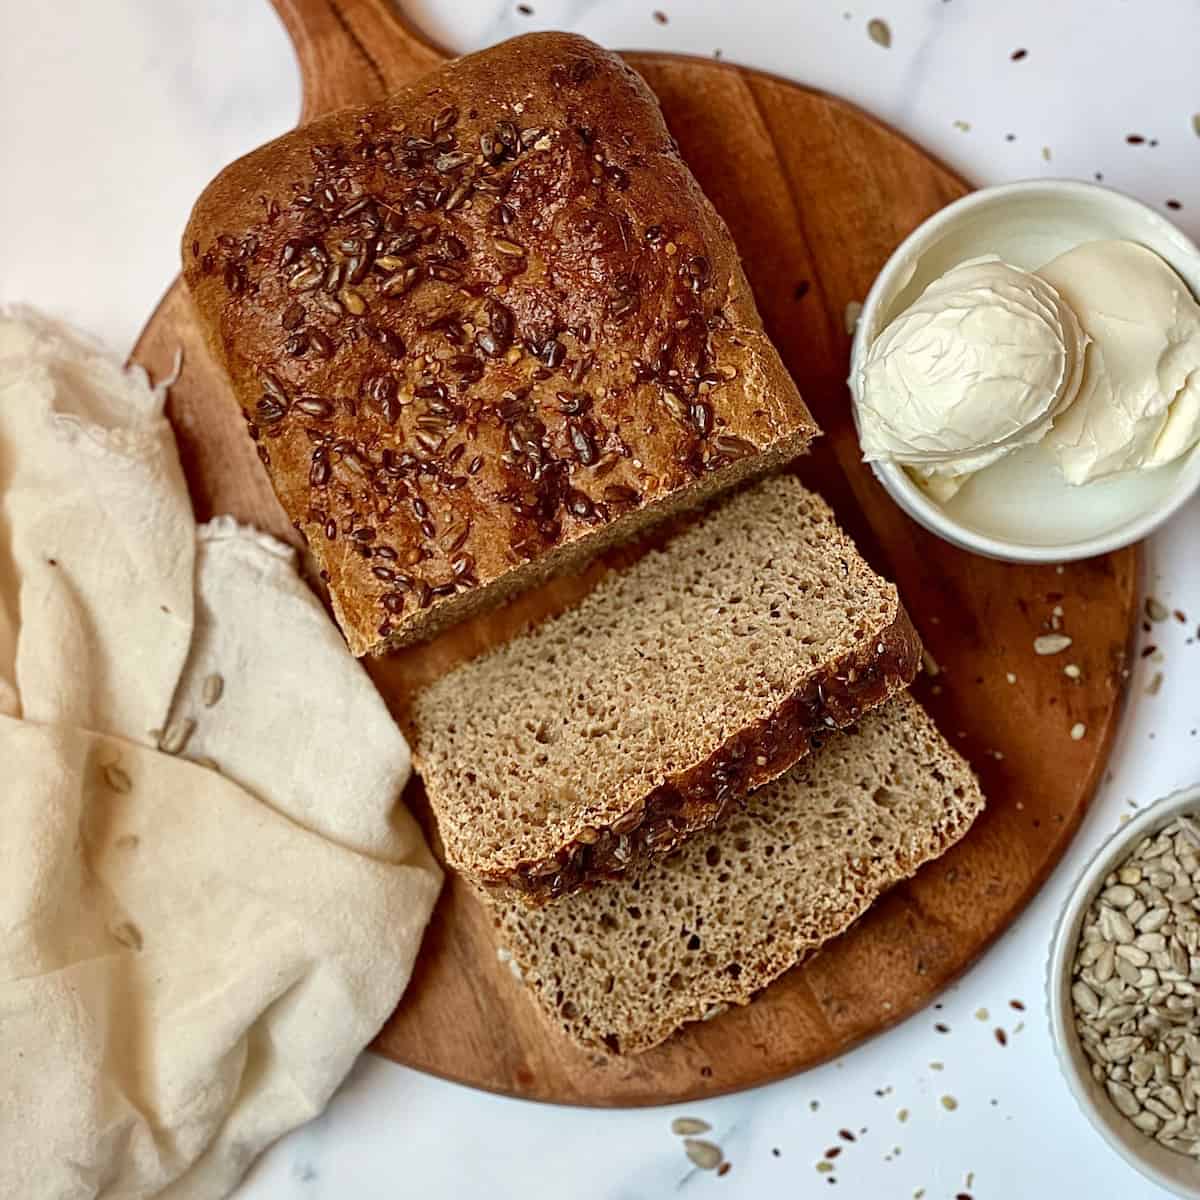 https://tastyoven.com/wp-content/uploads/2021/11/bread-machine-whole-wheat-bread-image.jpg